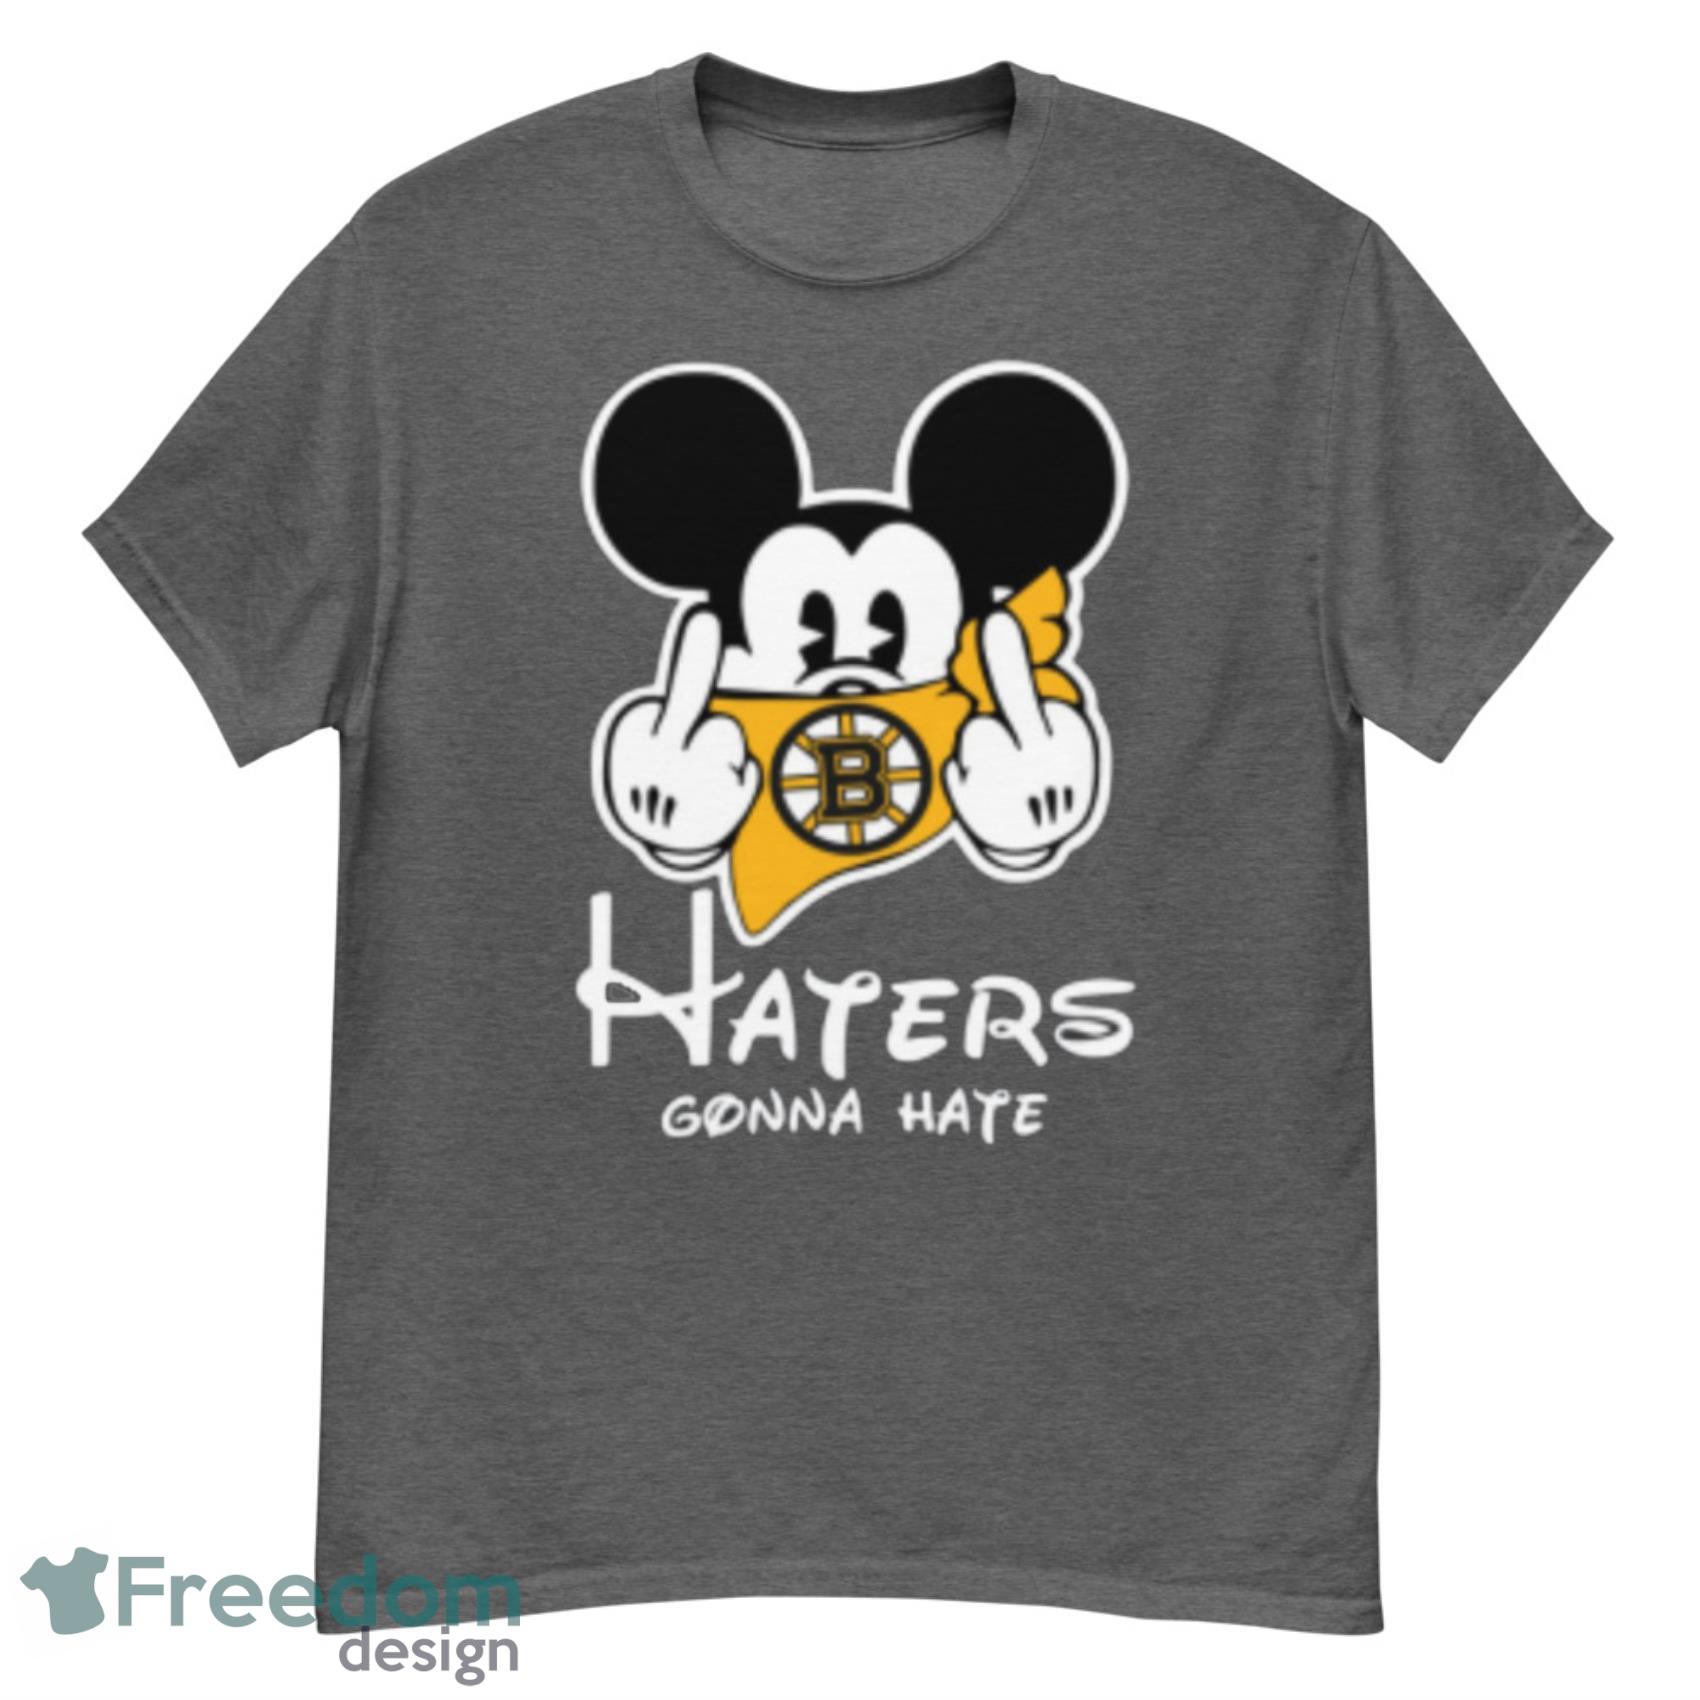 NHL Boston Bruins Mickey Mouse Disney Hockey T Shirt Women's T-Shirt